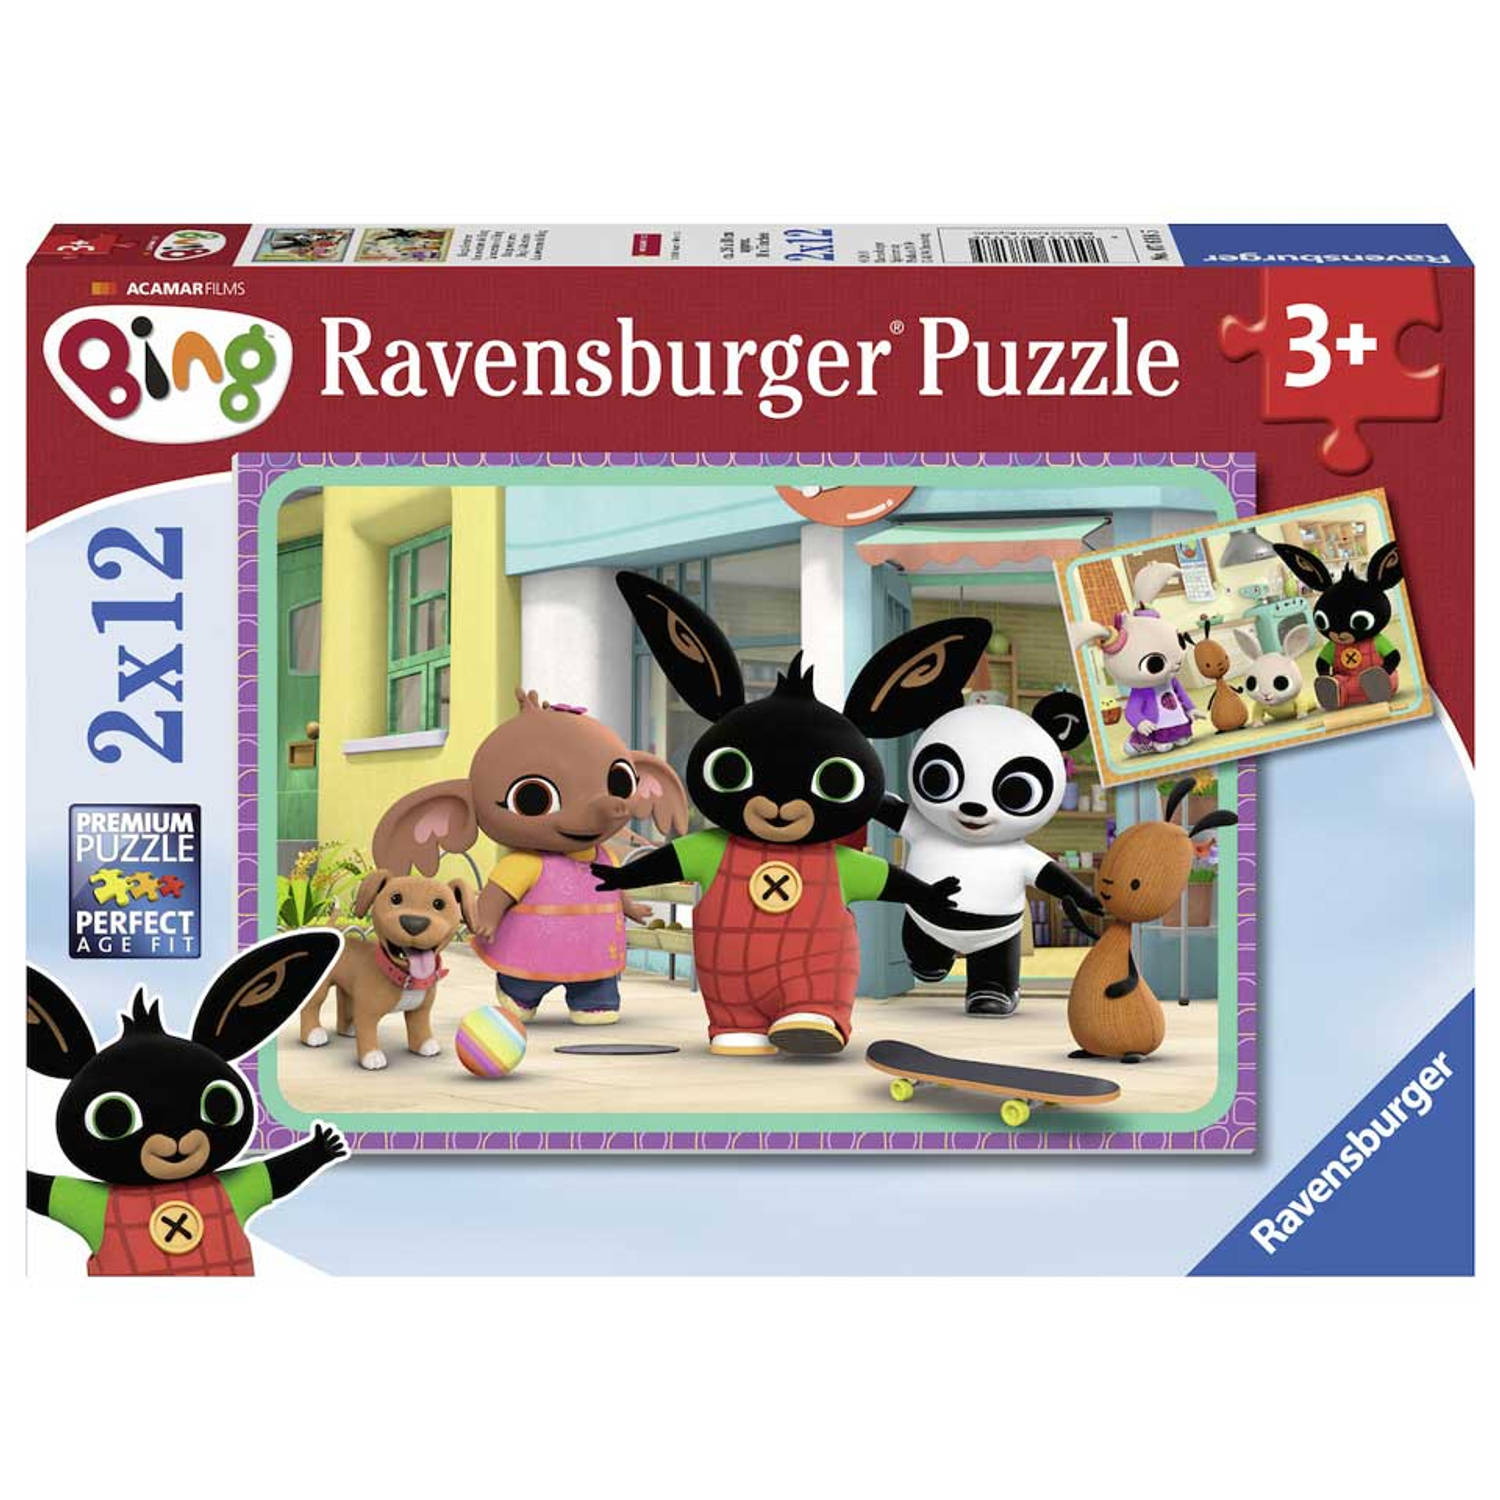 Ravensburger Puzzle Bings Abenteuer 07618